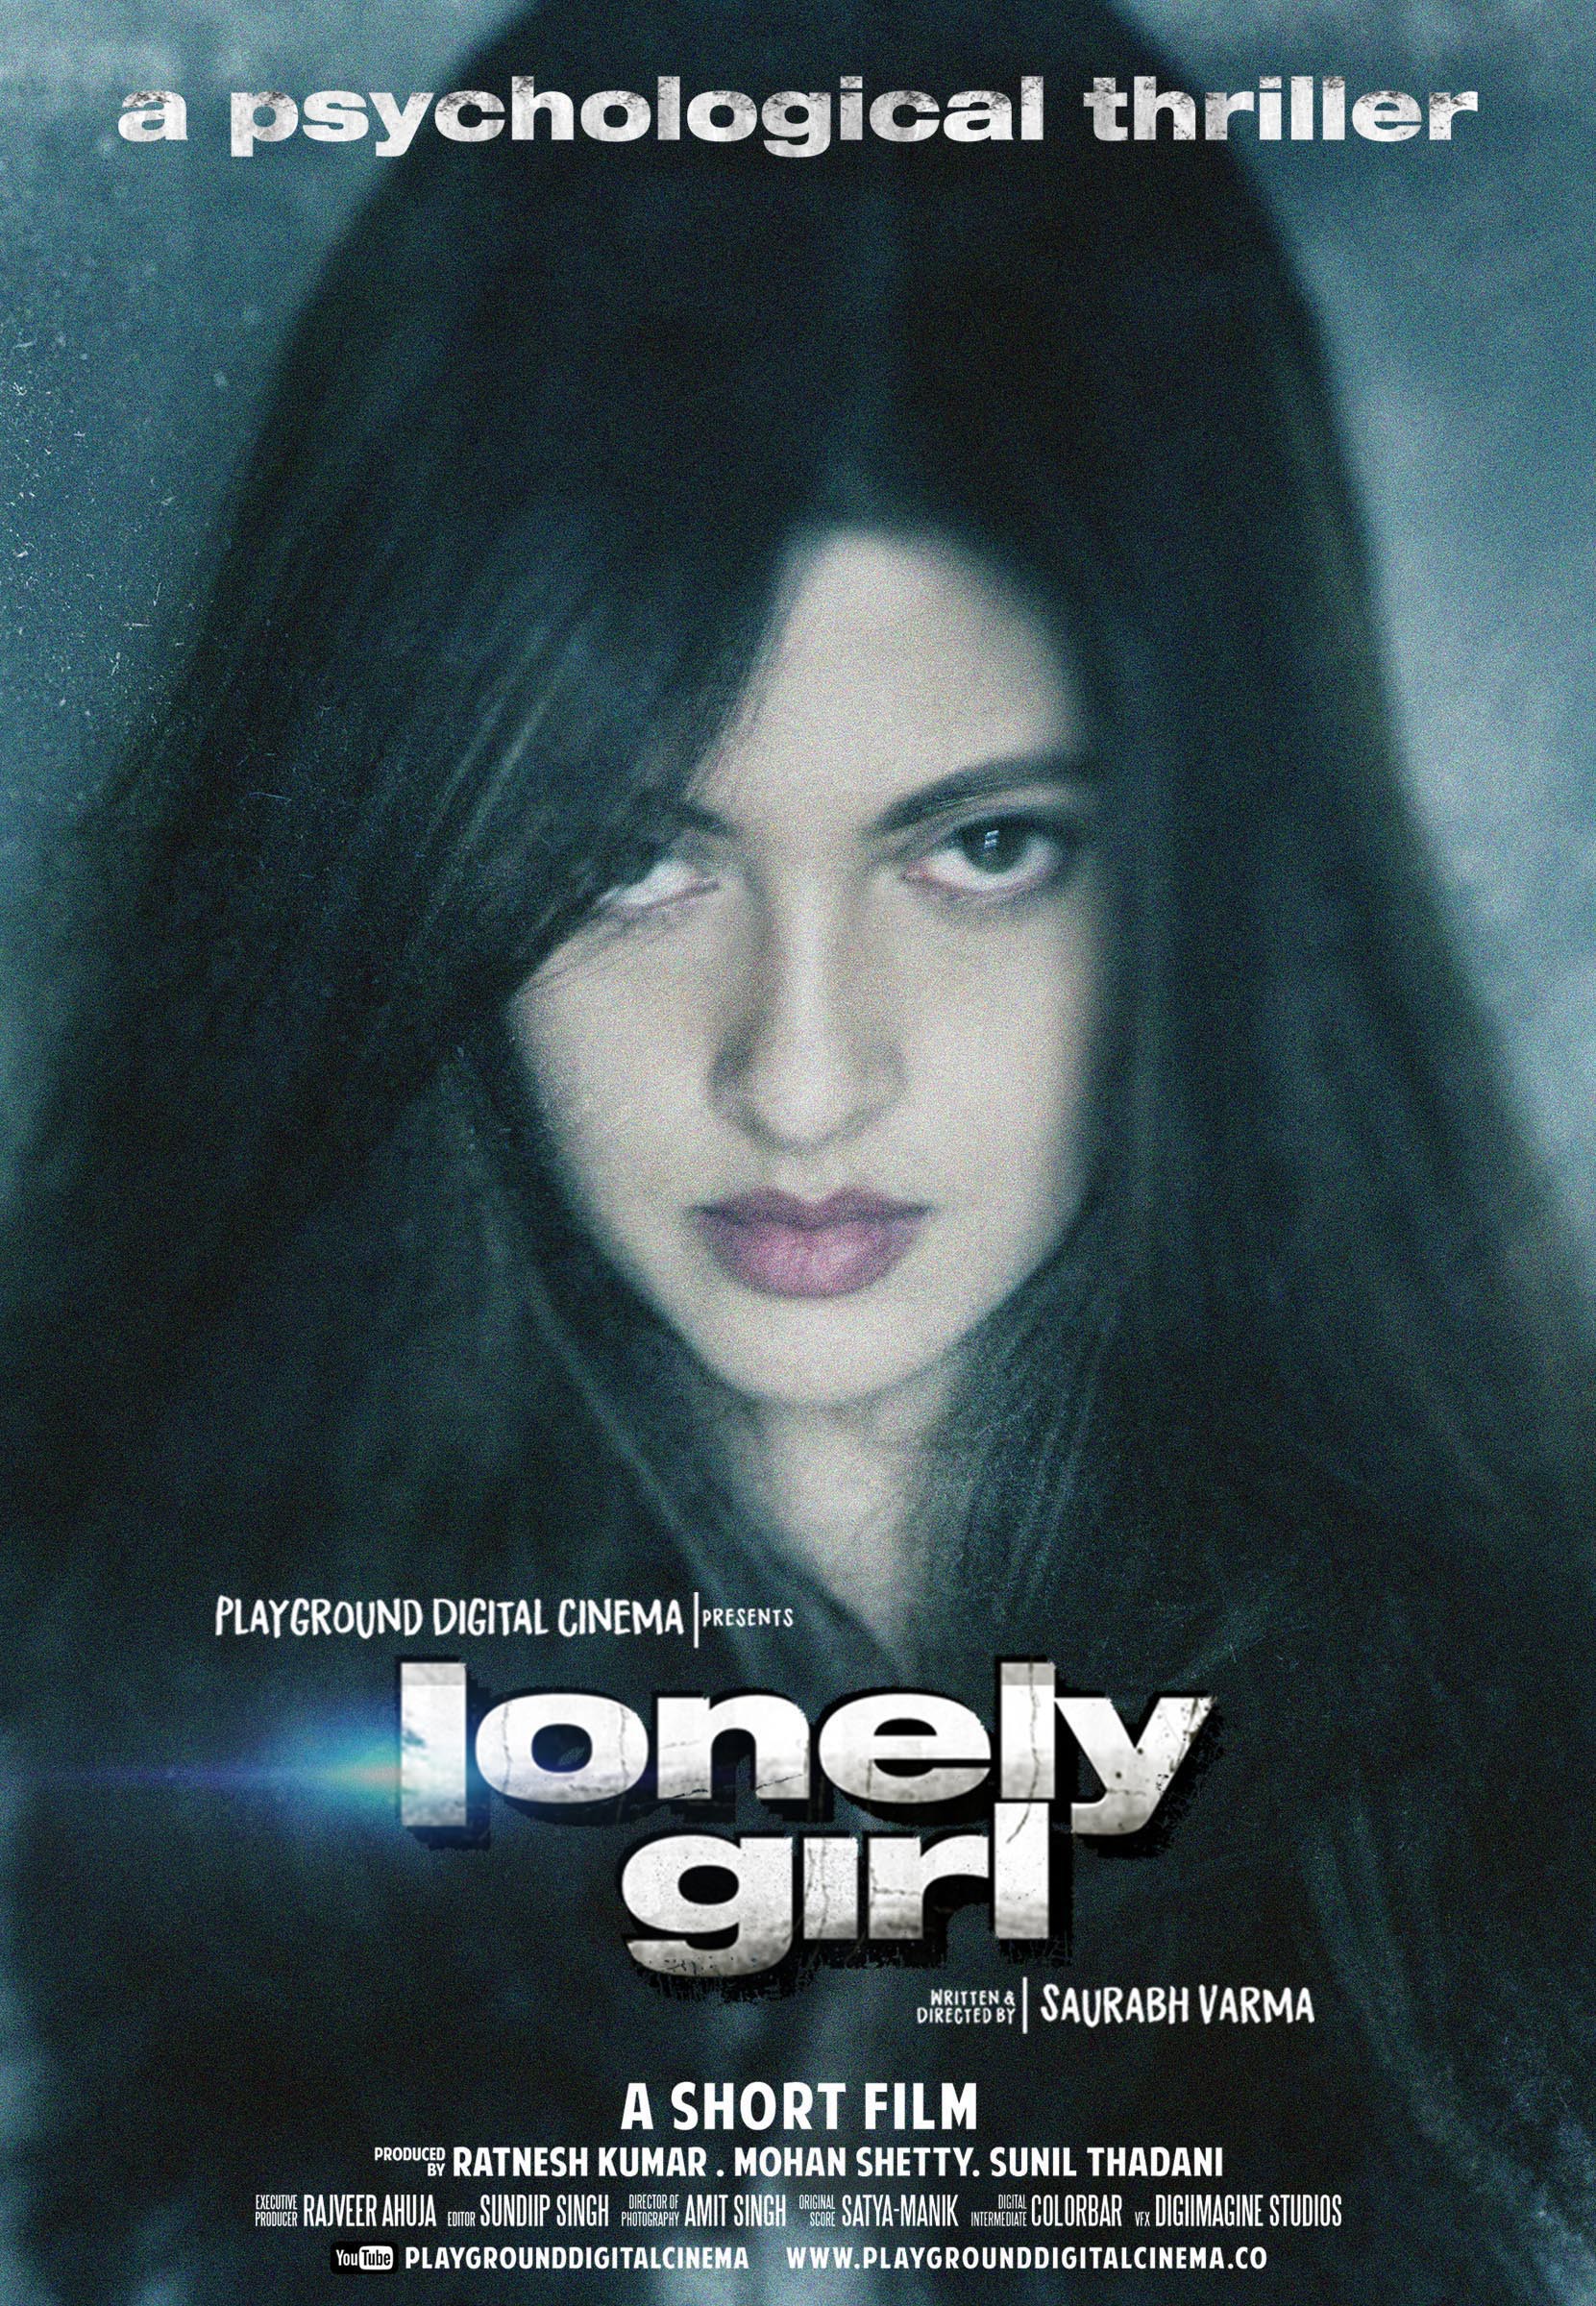 Mega Sized Movie Poster Image for Lonely Girl: A Psychological Thriller